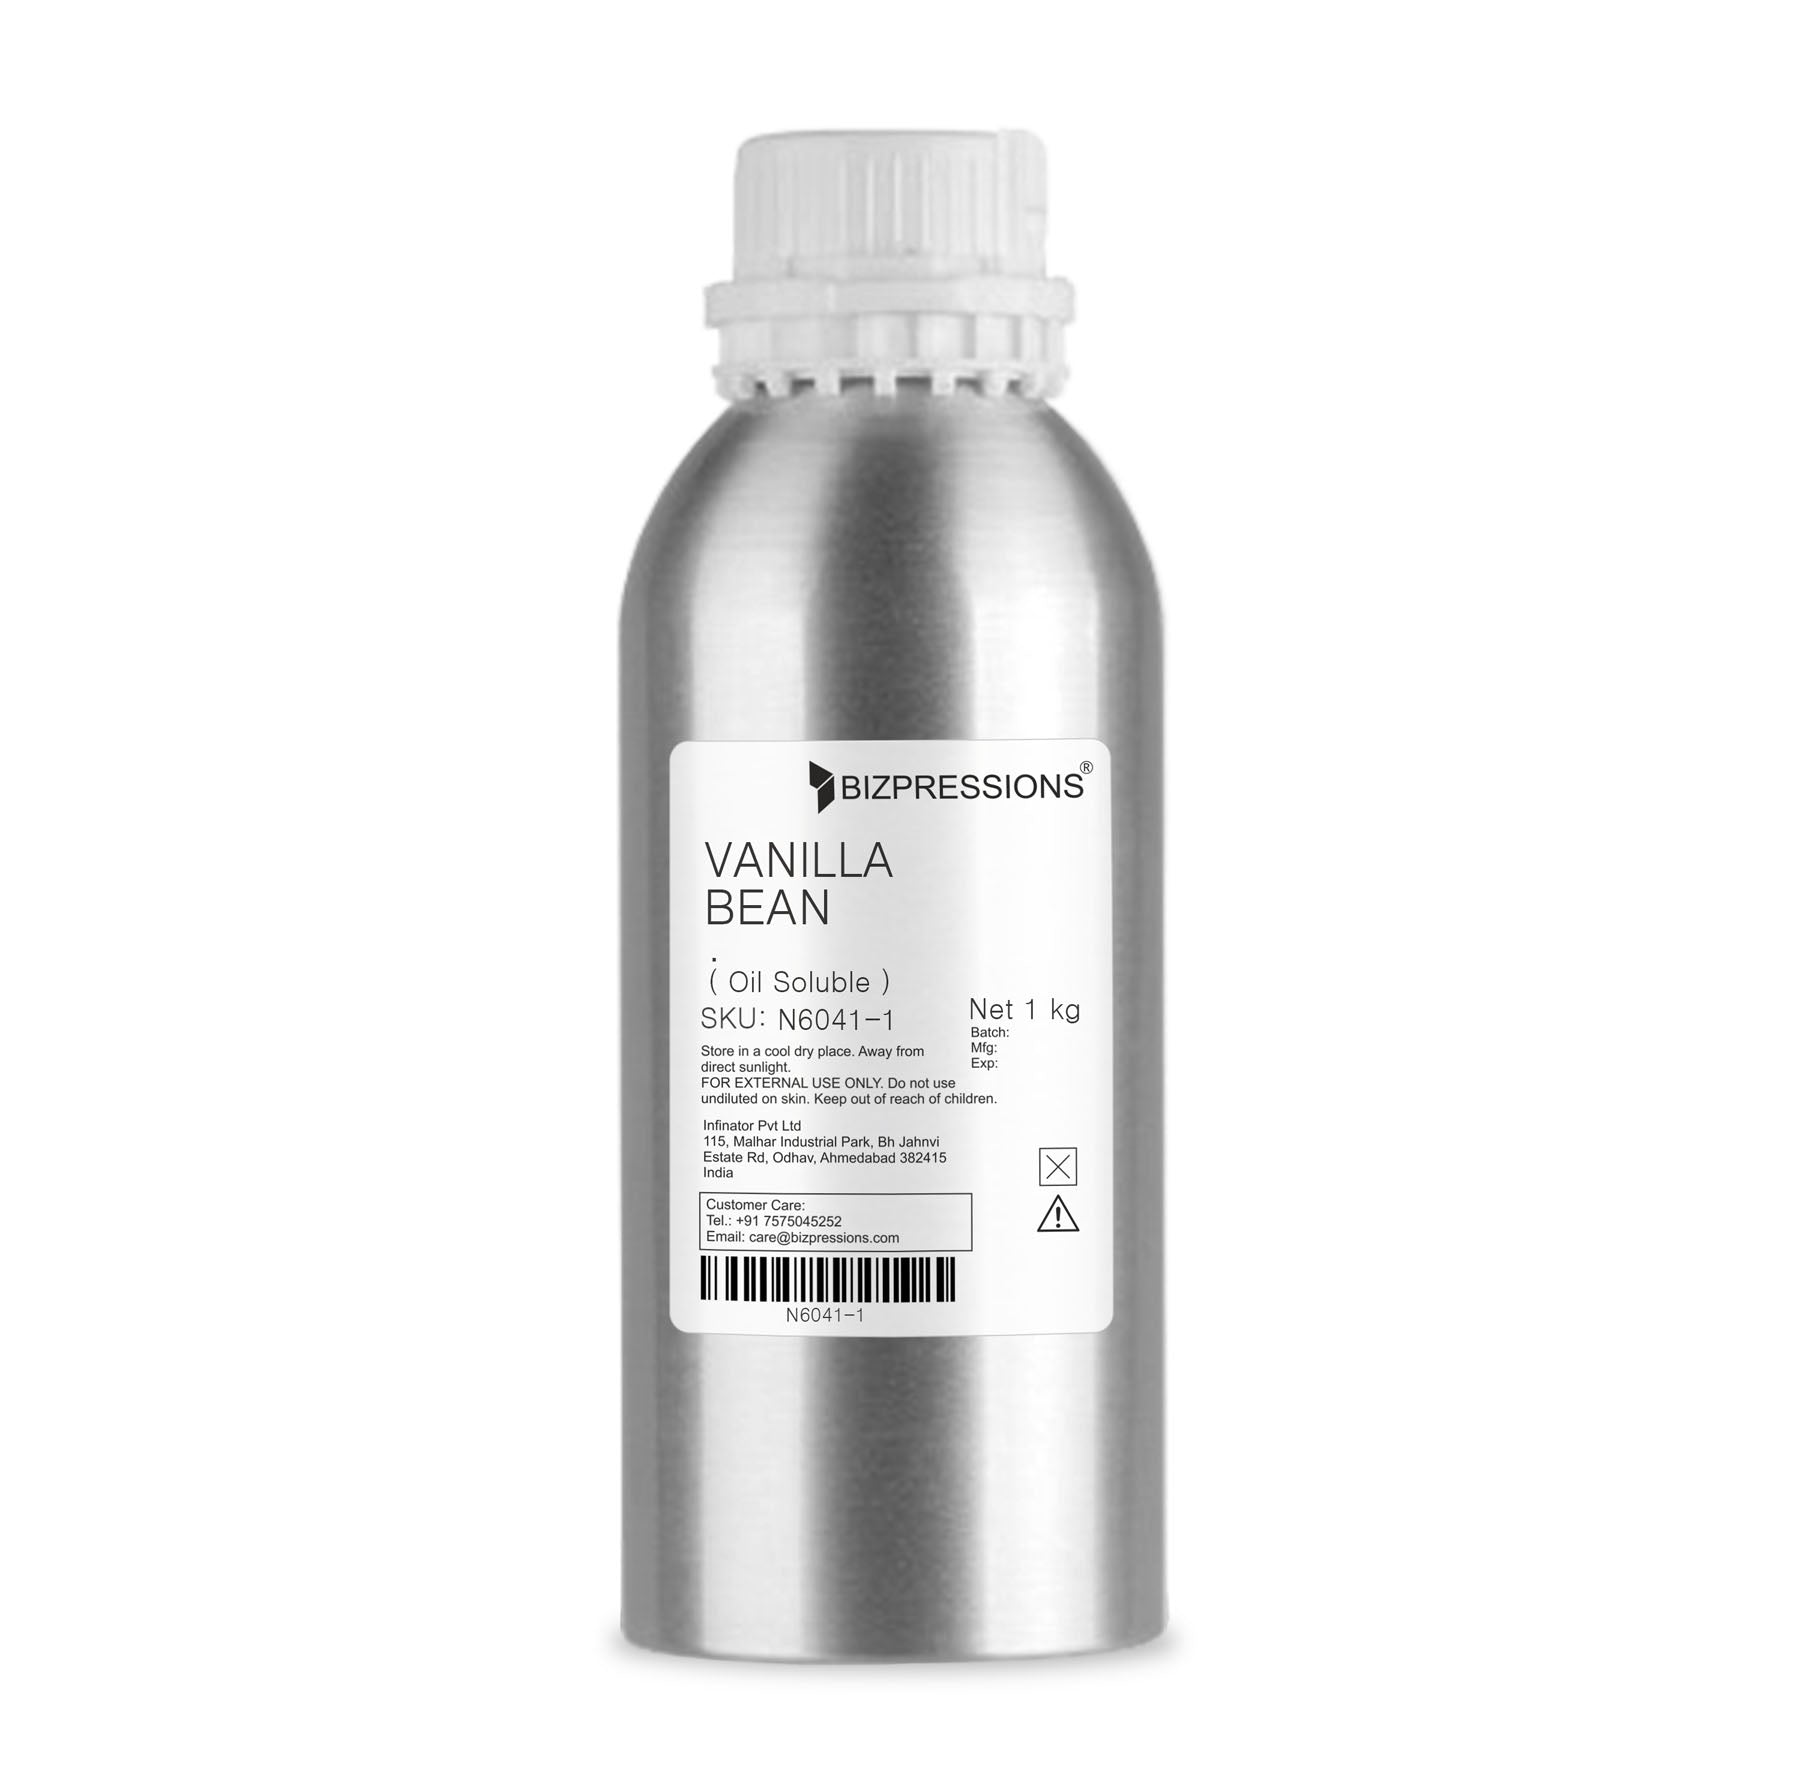 VANILLA BEAN - Fragrance ( Oil Soluble ) - 1 kg